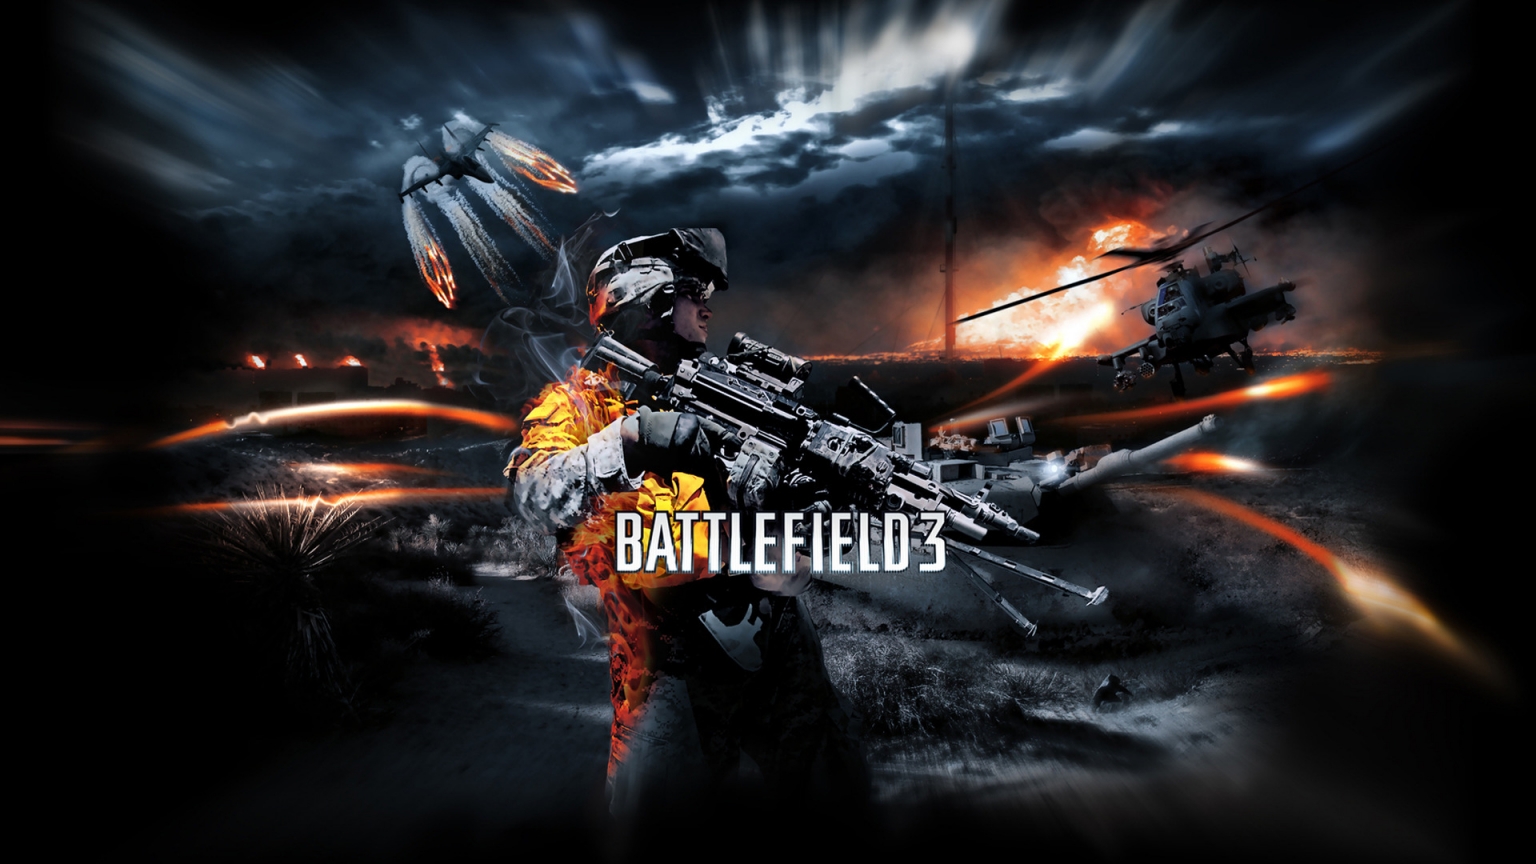 Battlefield 3 Poster for 1536 x 864 HDTV resolution